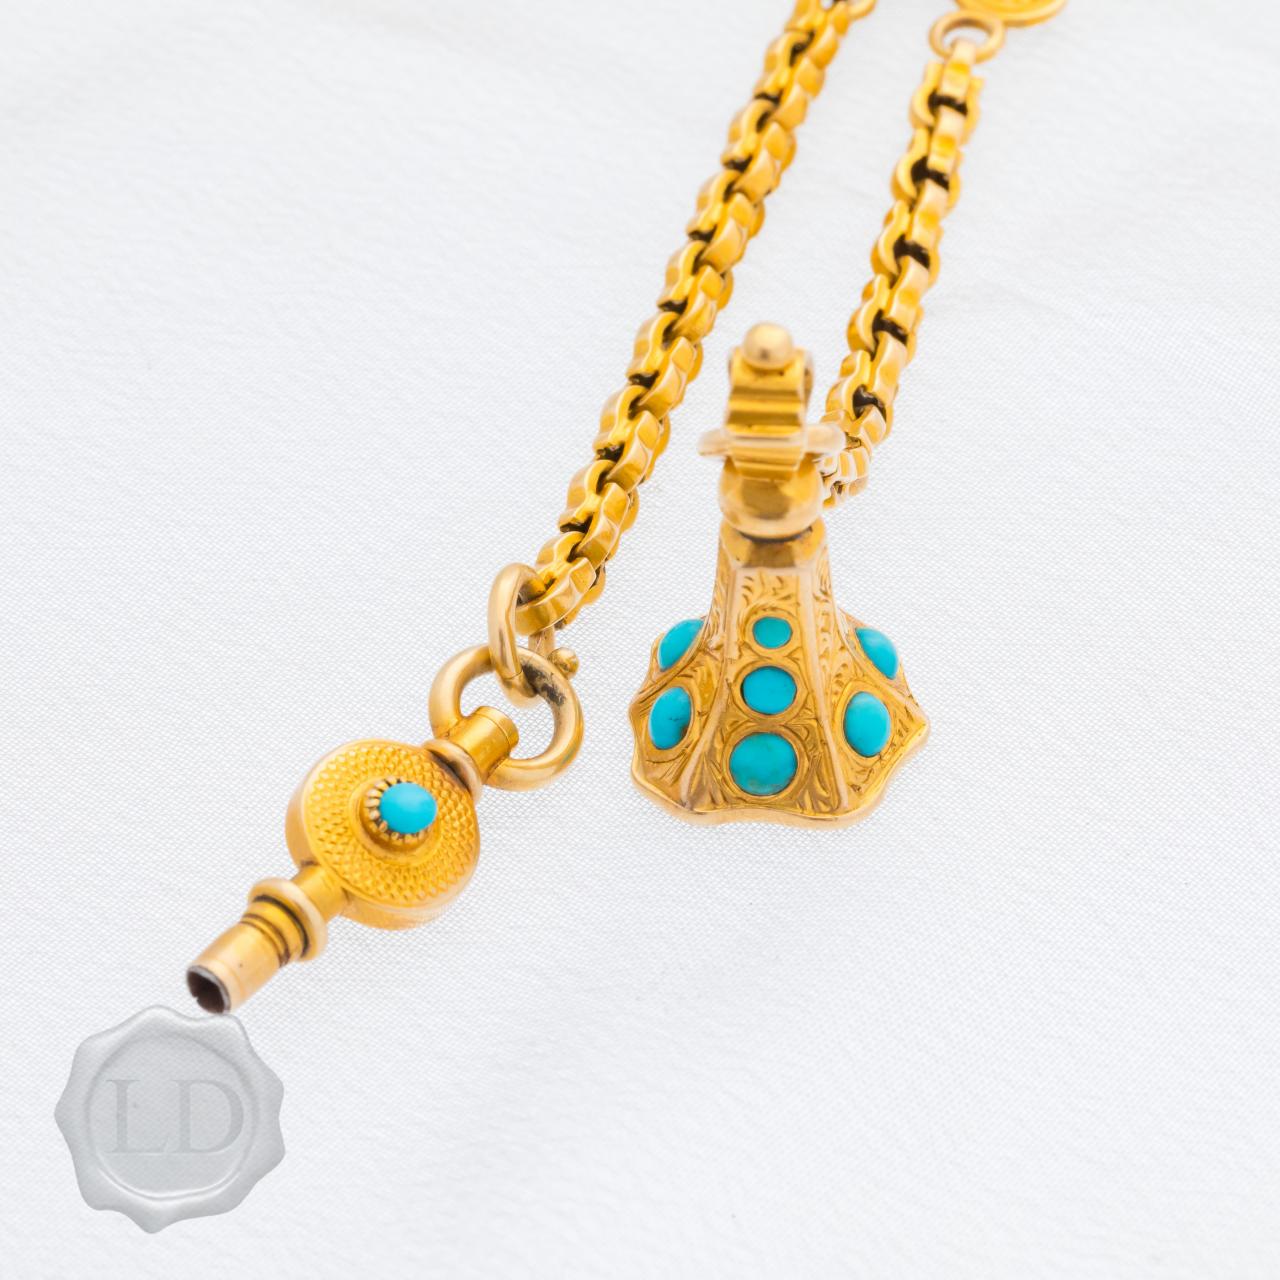 Exquisite turquoise set necklace drop